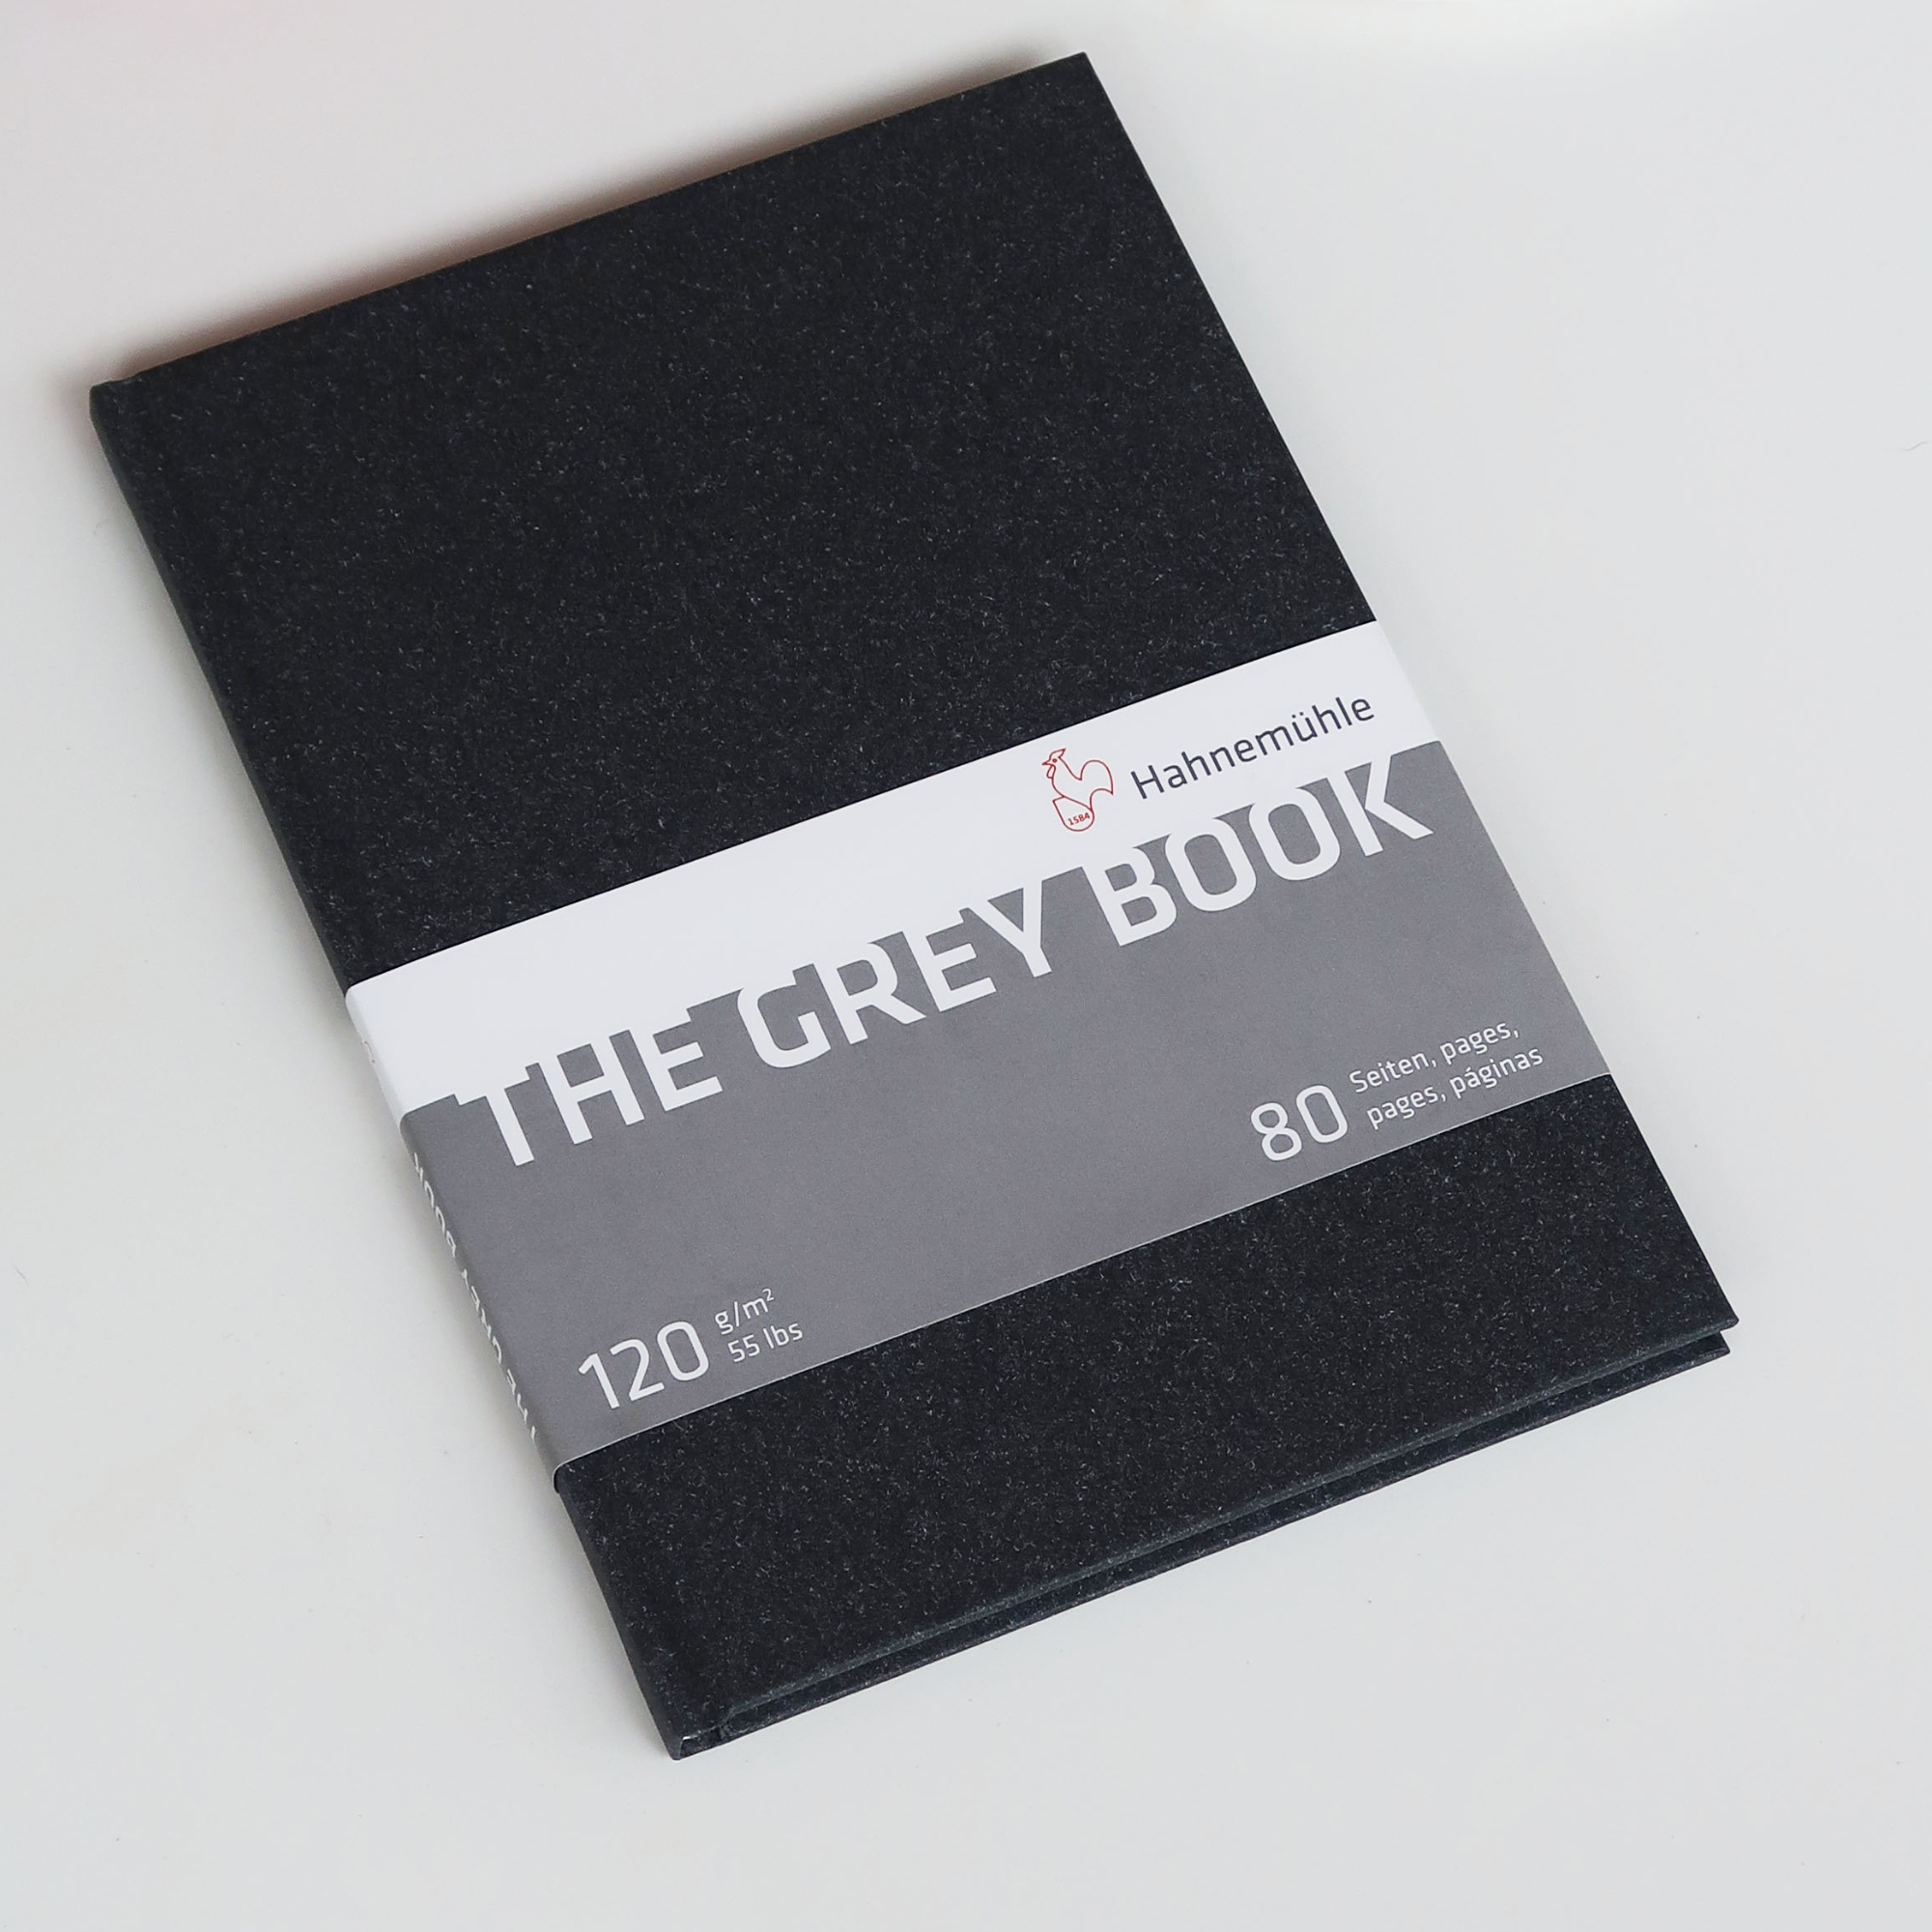 The Grey Book & The Cappuccino Book